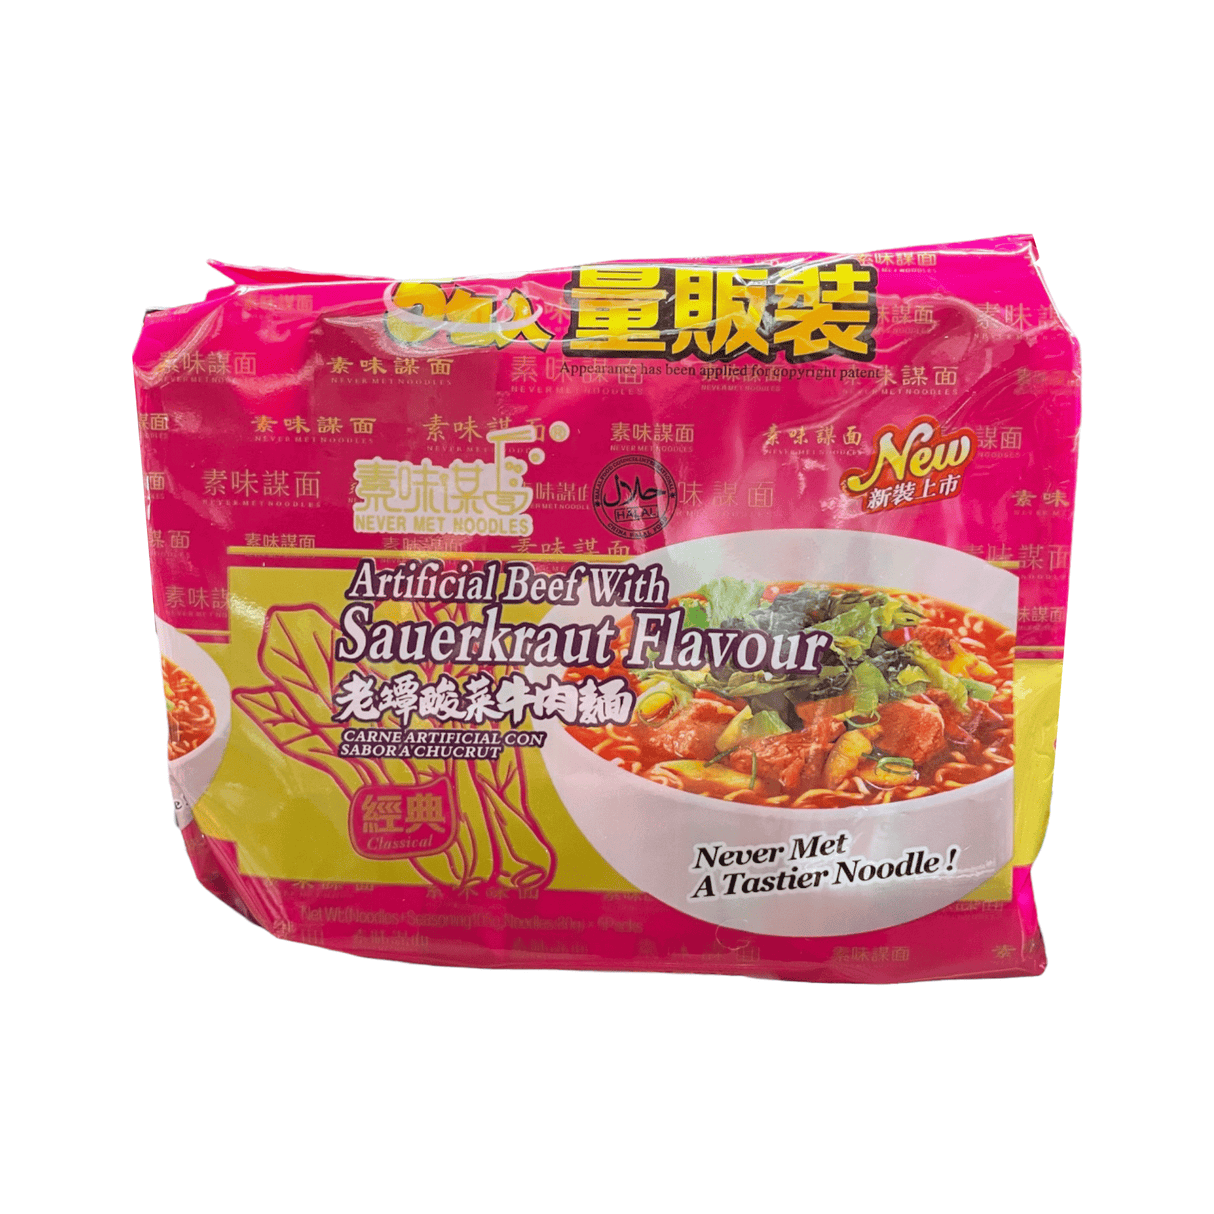 Never Met Noodles Artificial Beef with Sauerkraut Flavour Classical